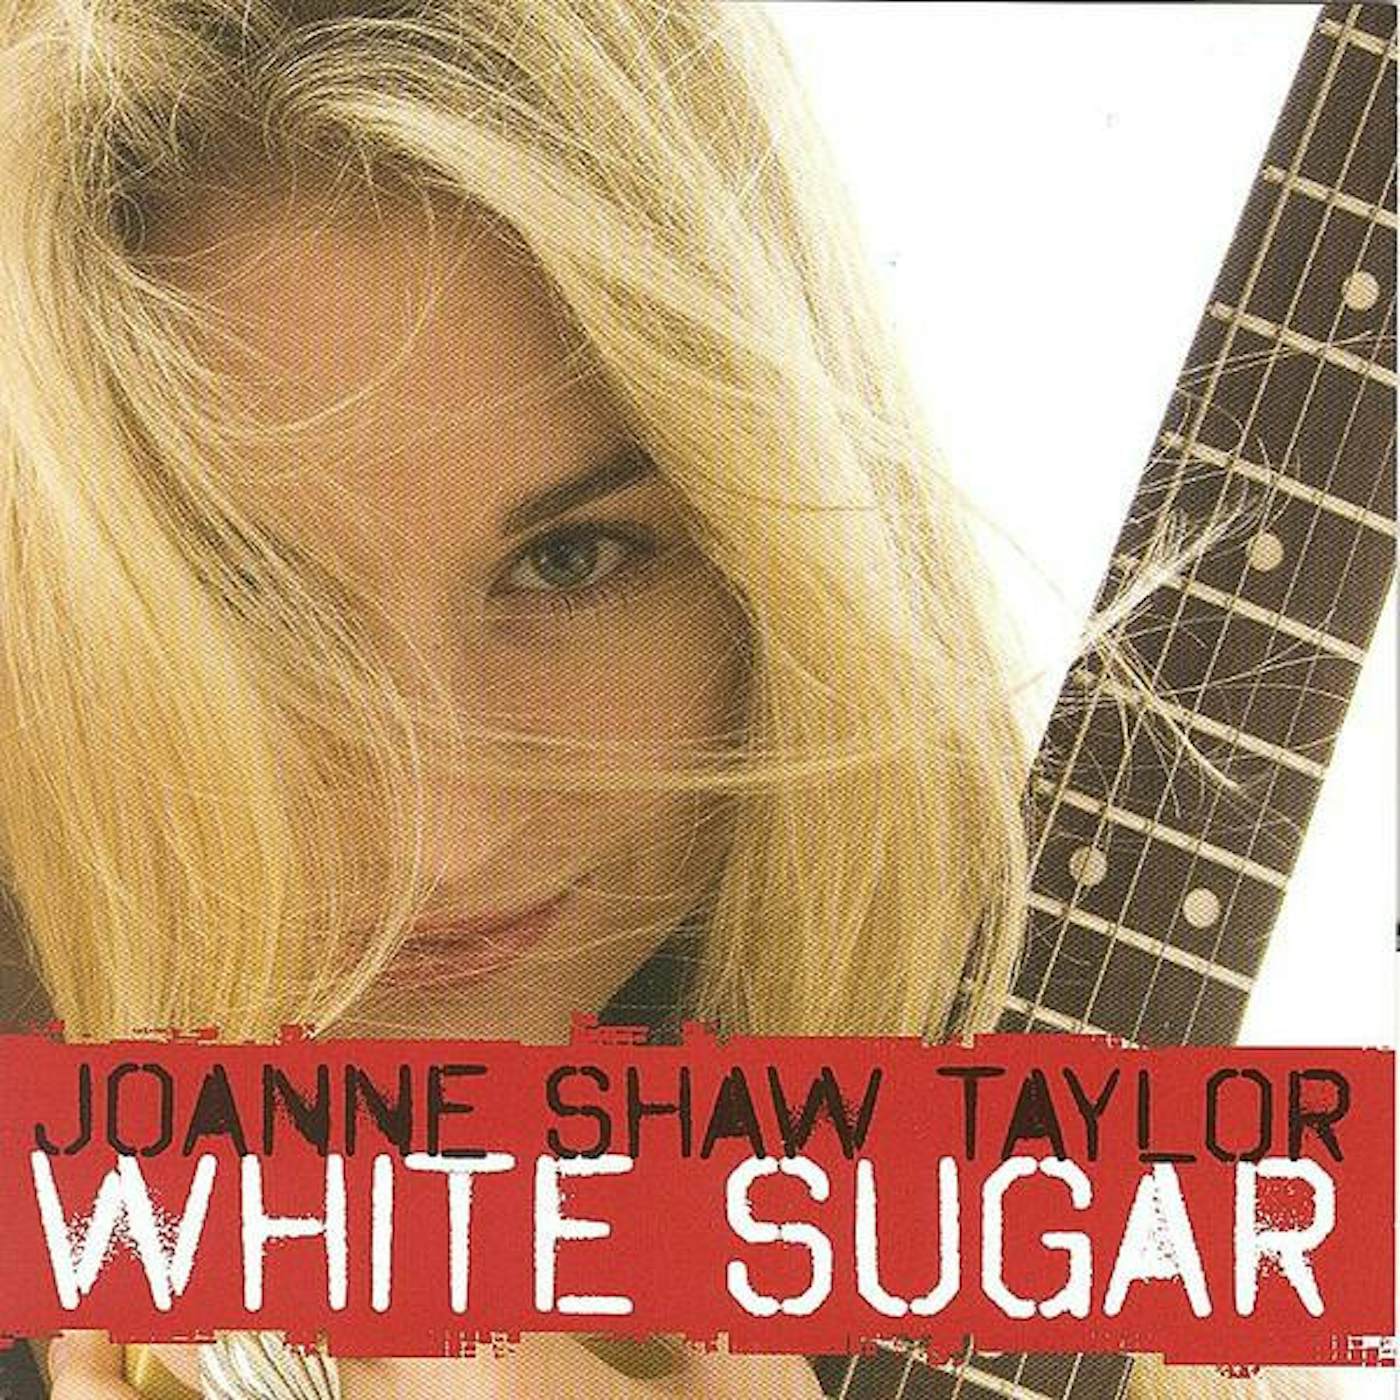 Joanne Shaw Taylor WHITE SUGAR CD